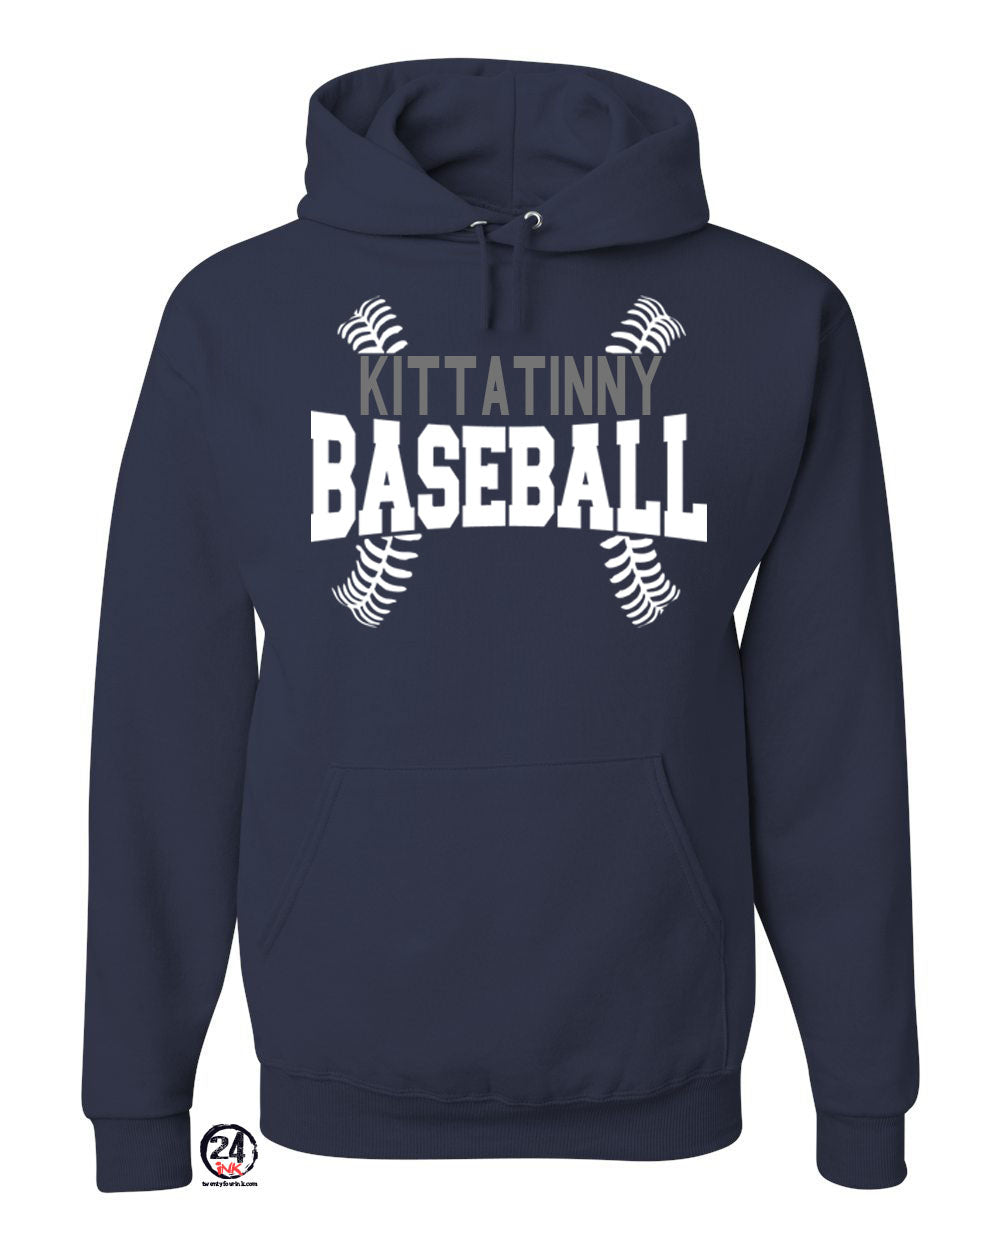 Kittatinny Baseball Hooded Sweatshirt